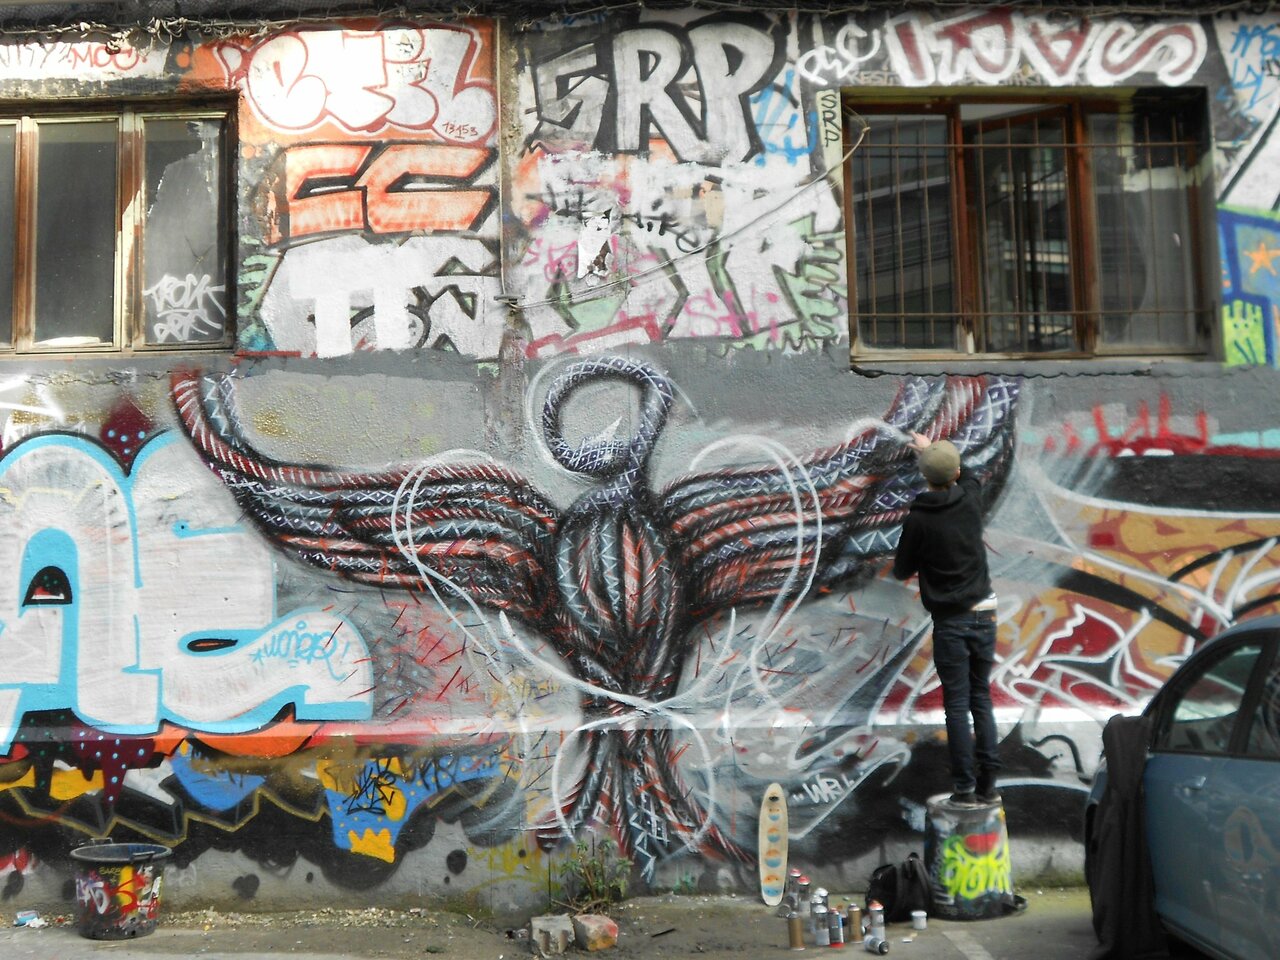 Les Frigos, Paris #streetart #graffiti #paris #urbanart http://t.co/CoeFiPaOH8